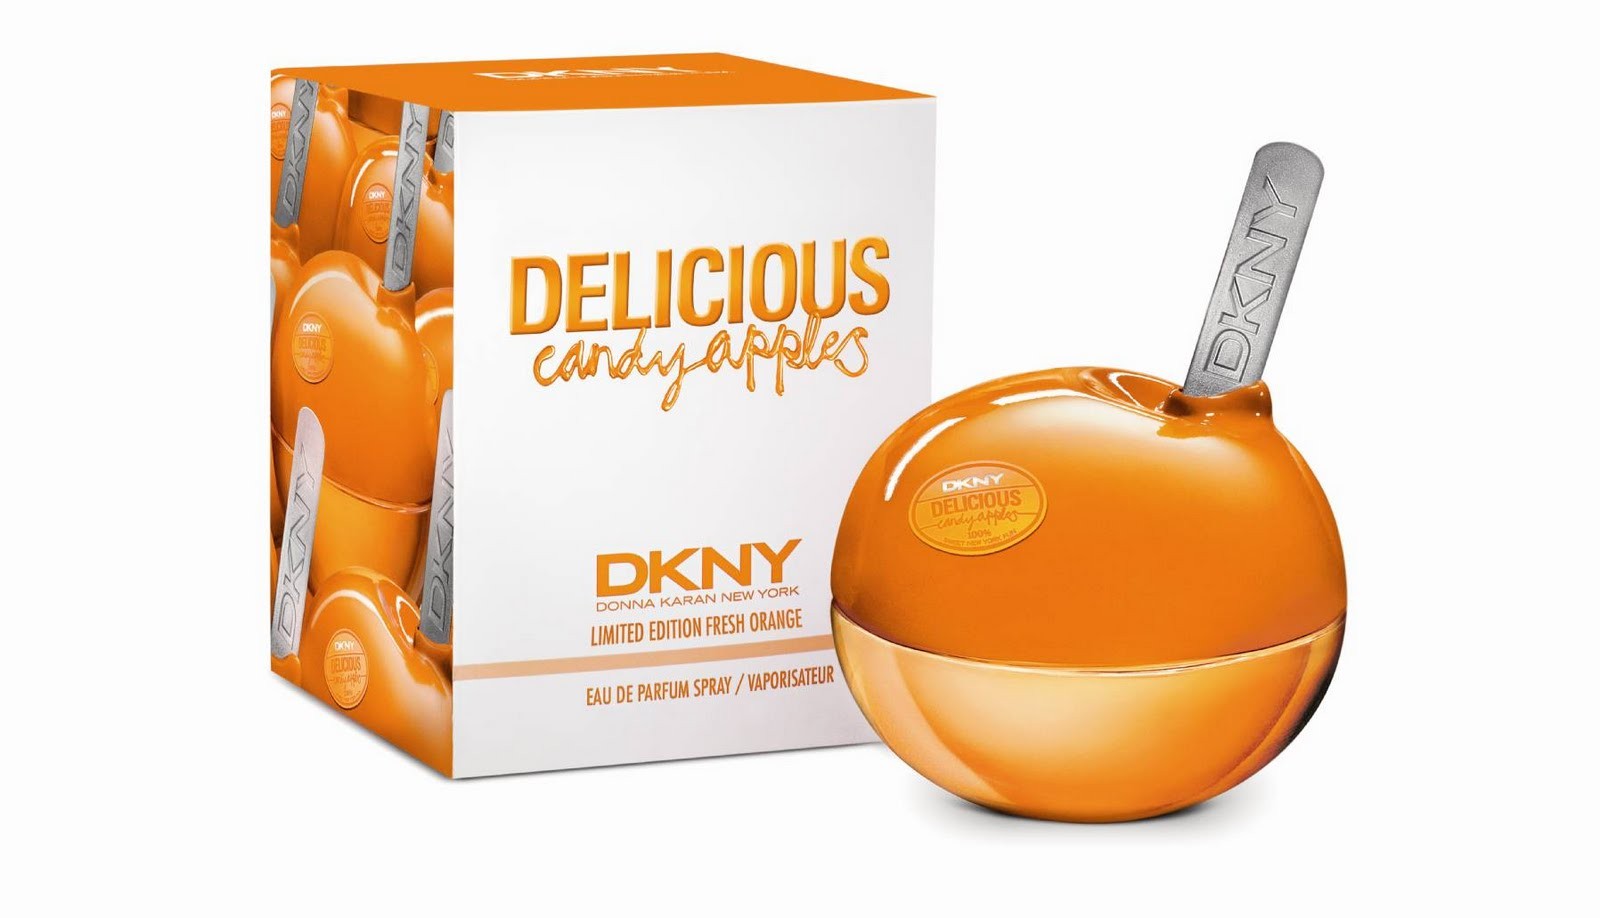 Изображение парфюма DKNY Be Delicious Candy Apples Fresh Orange